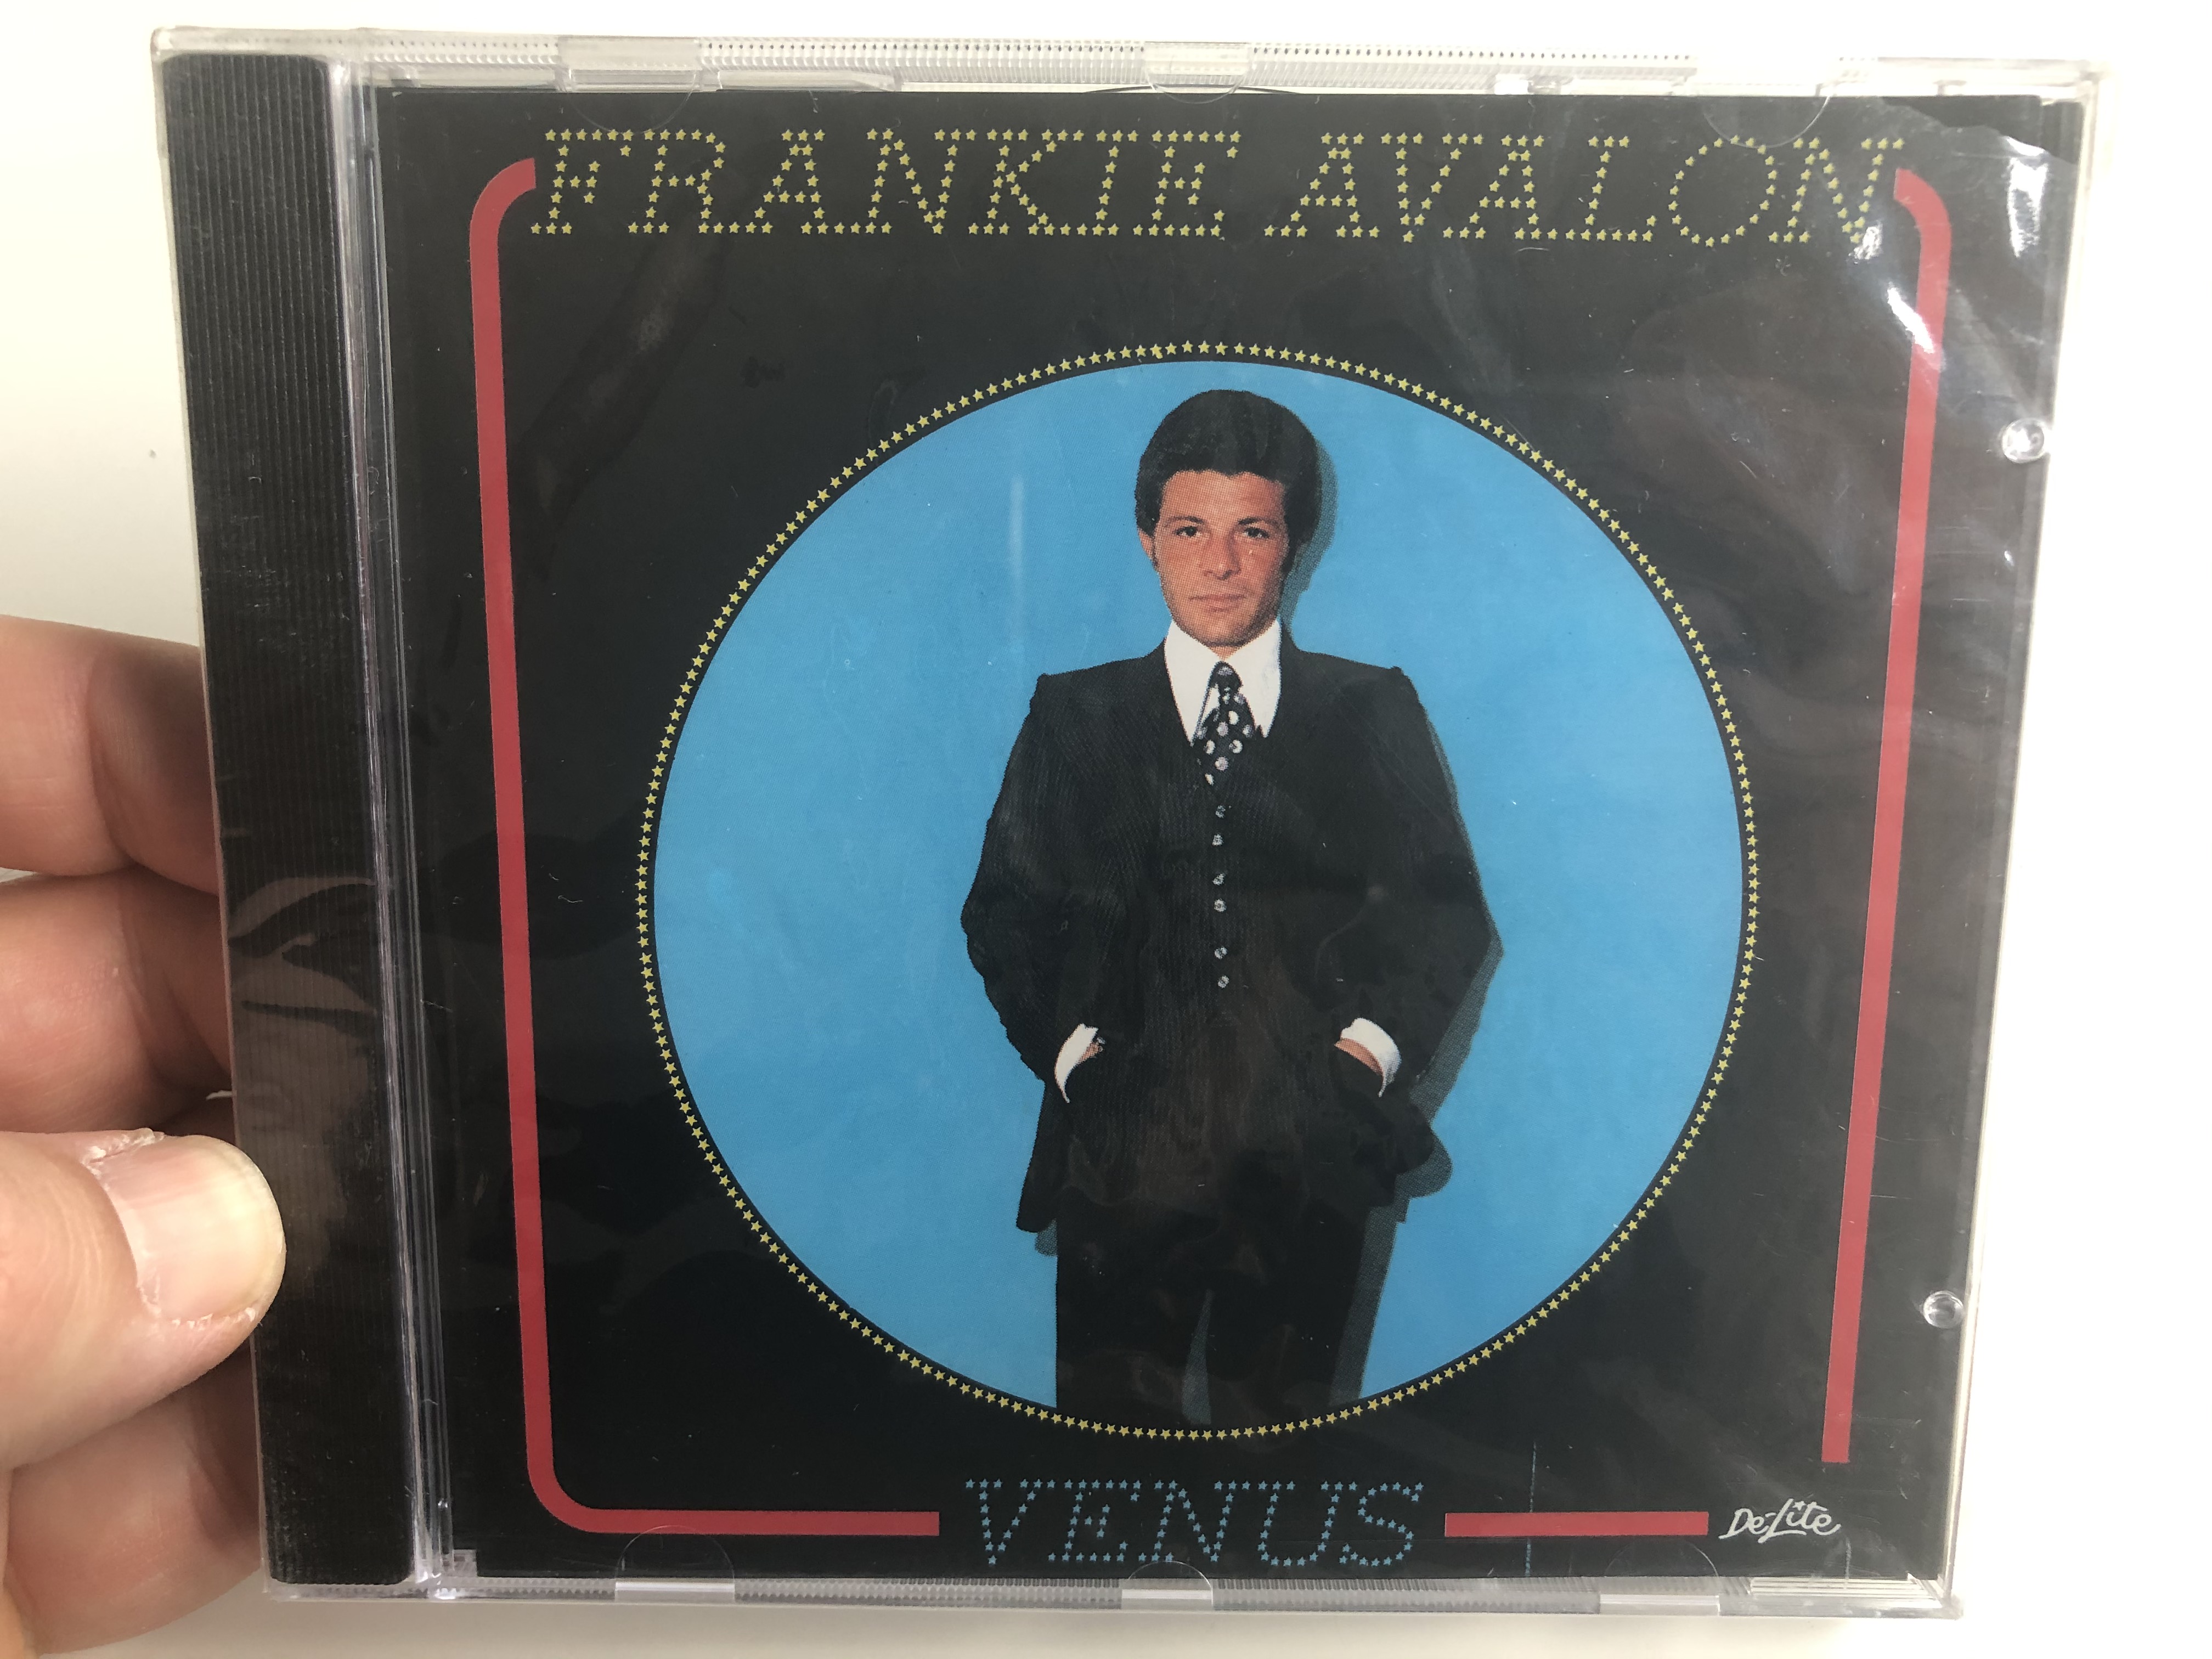 frankie-avalon-venus-unidisc-audio-cd-1993-splk-7159-1-.jpg